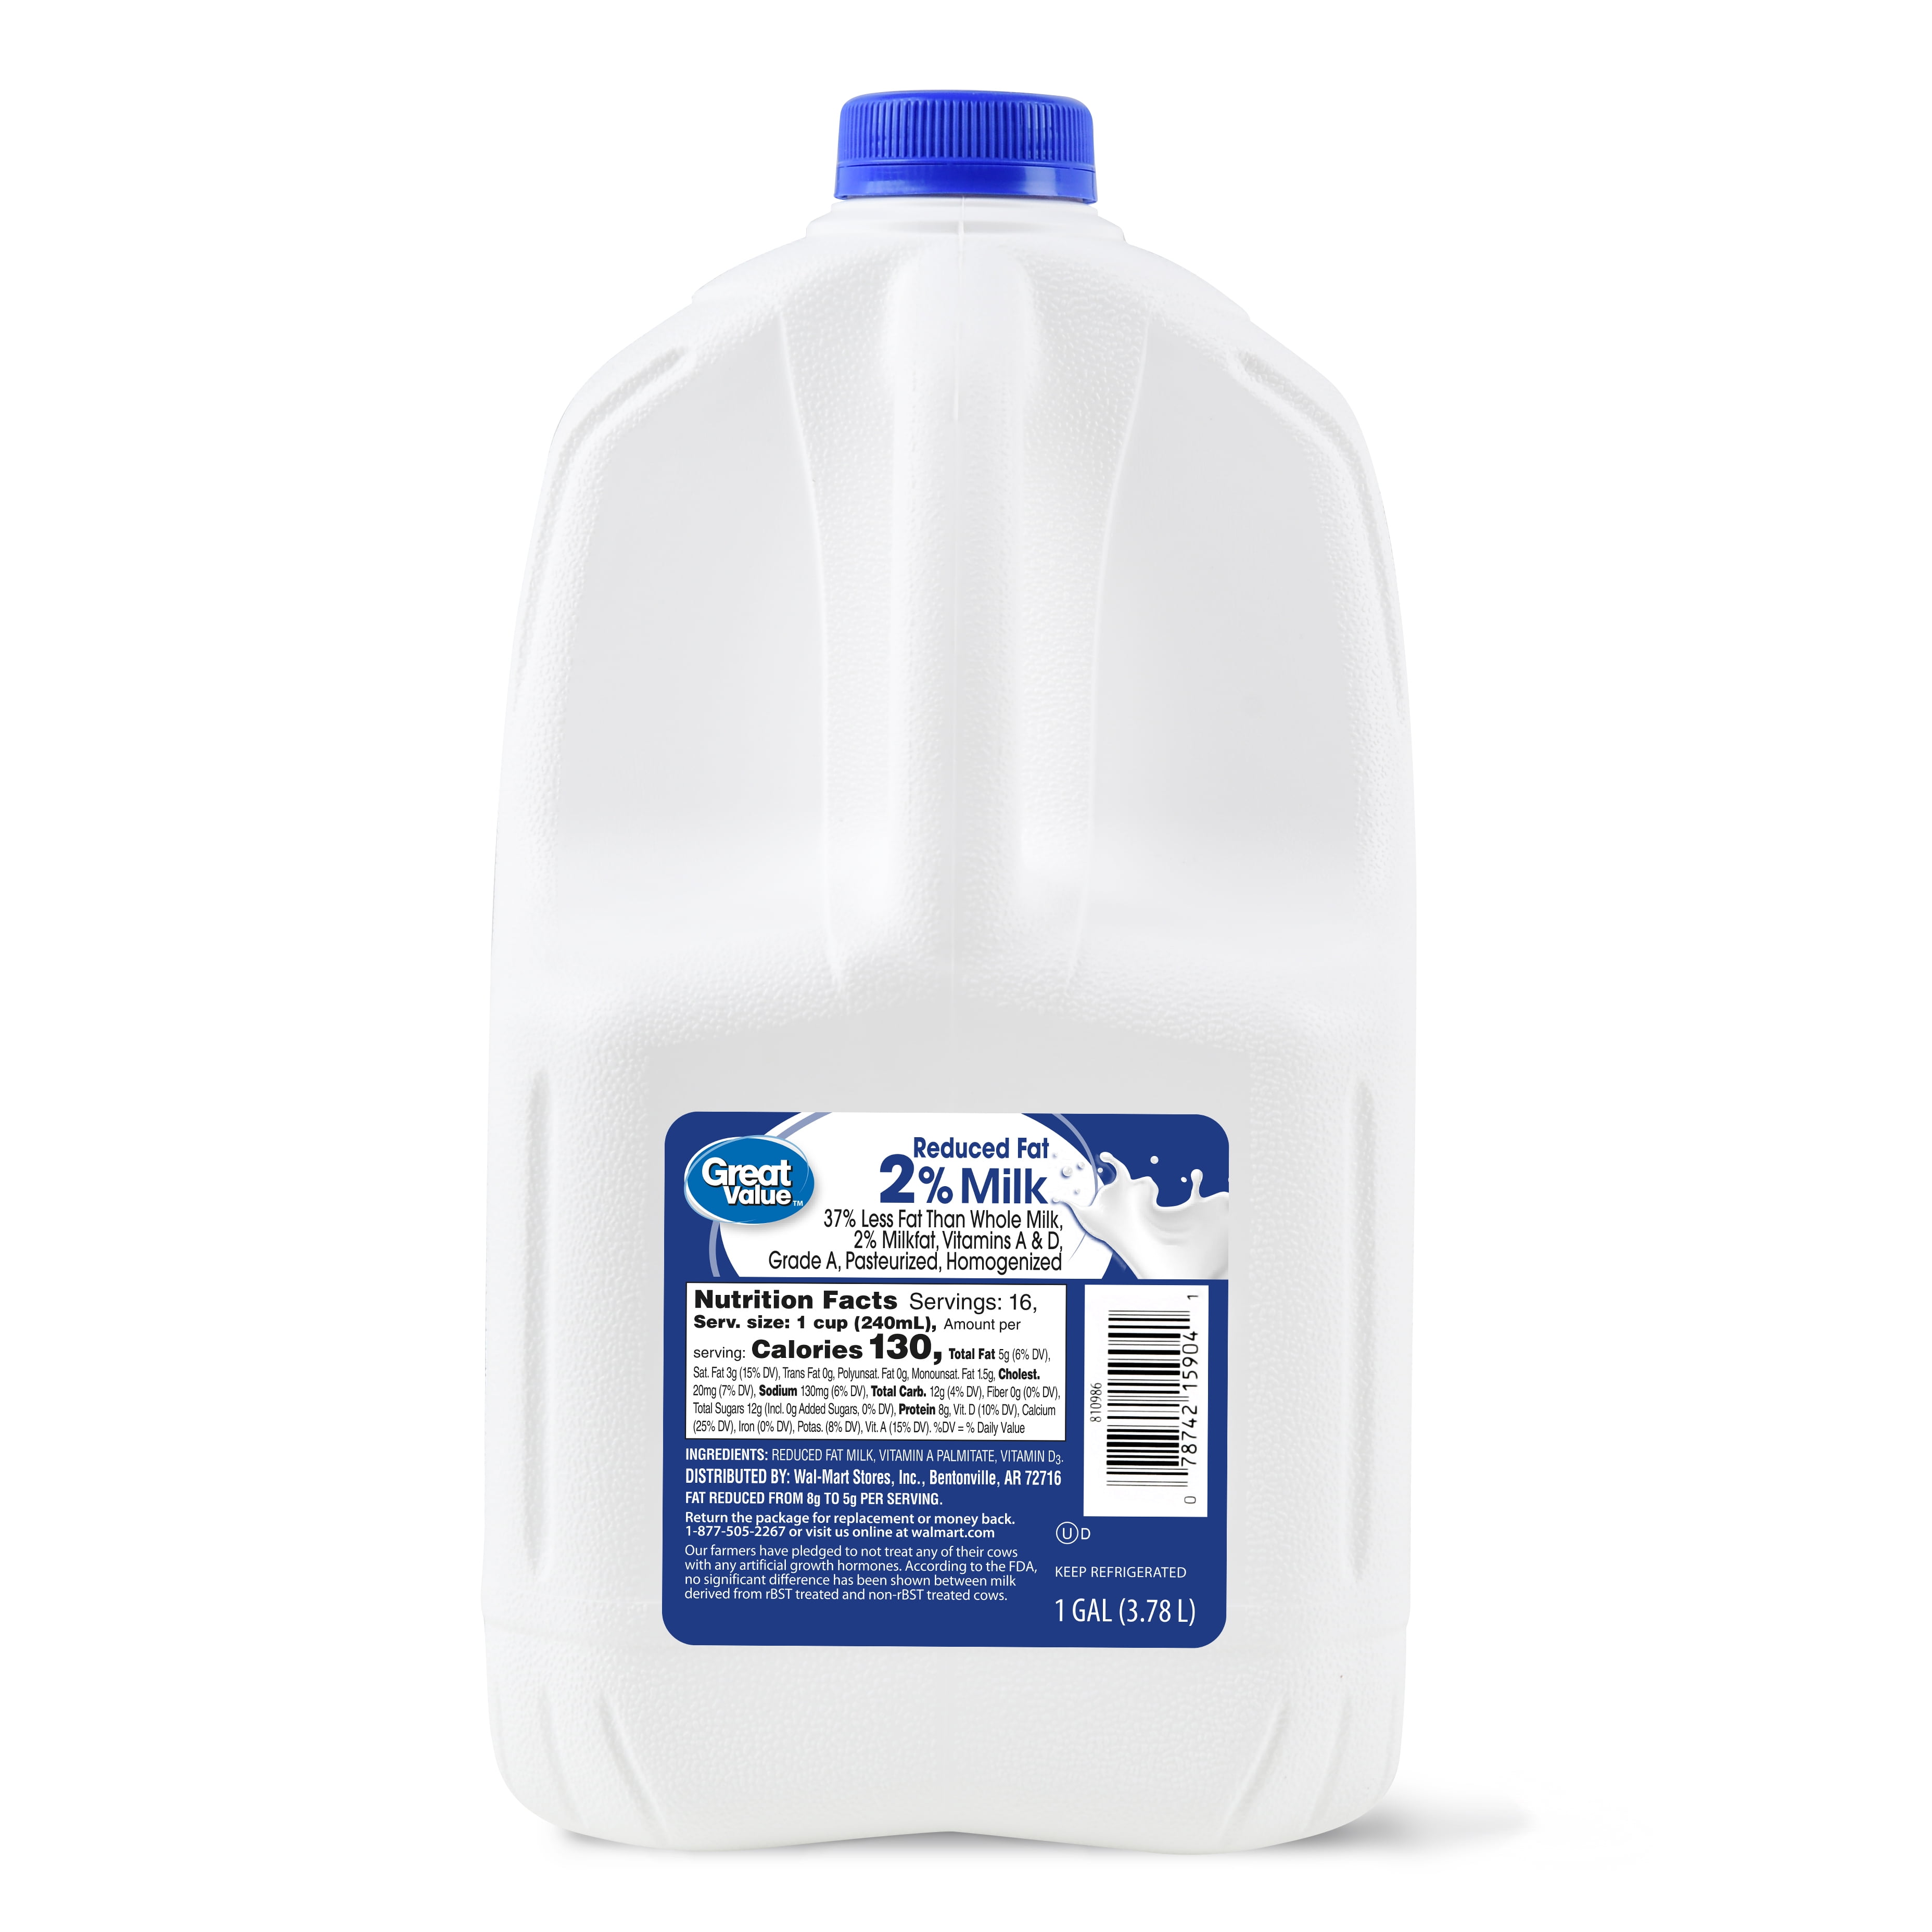 Great Value 2 Reduced Fat Milk, 128 Fl Oz